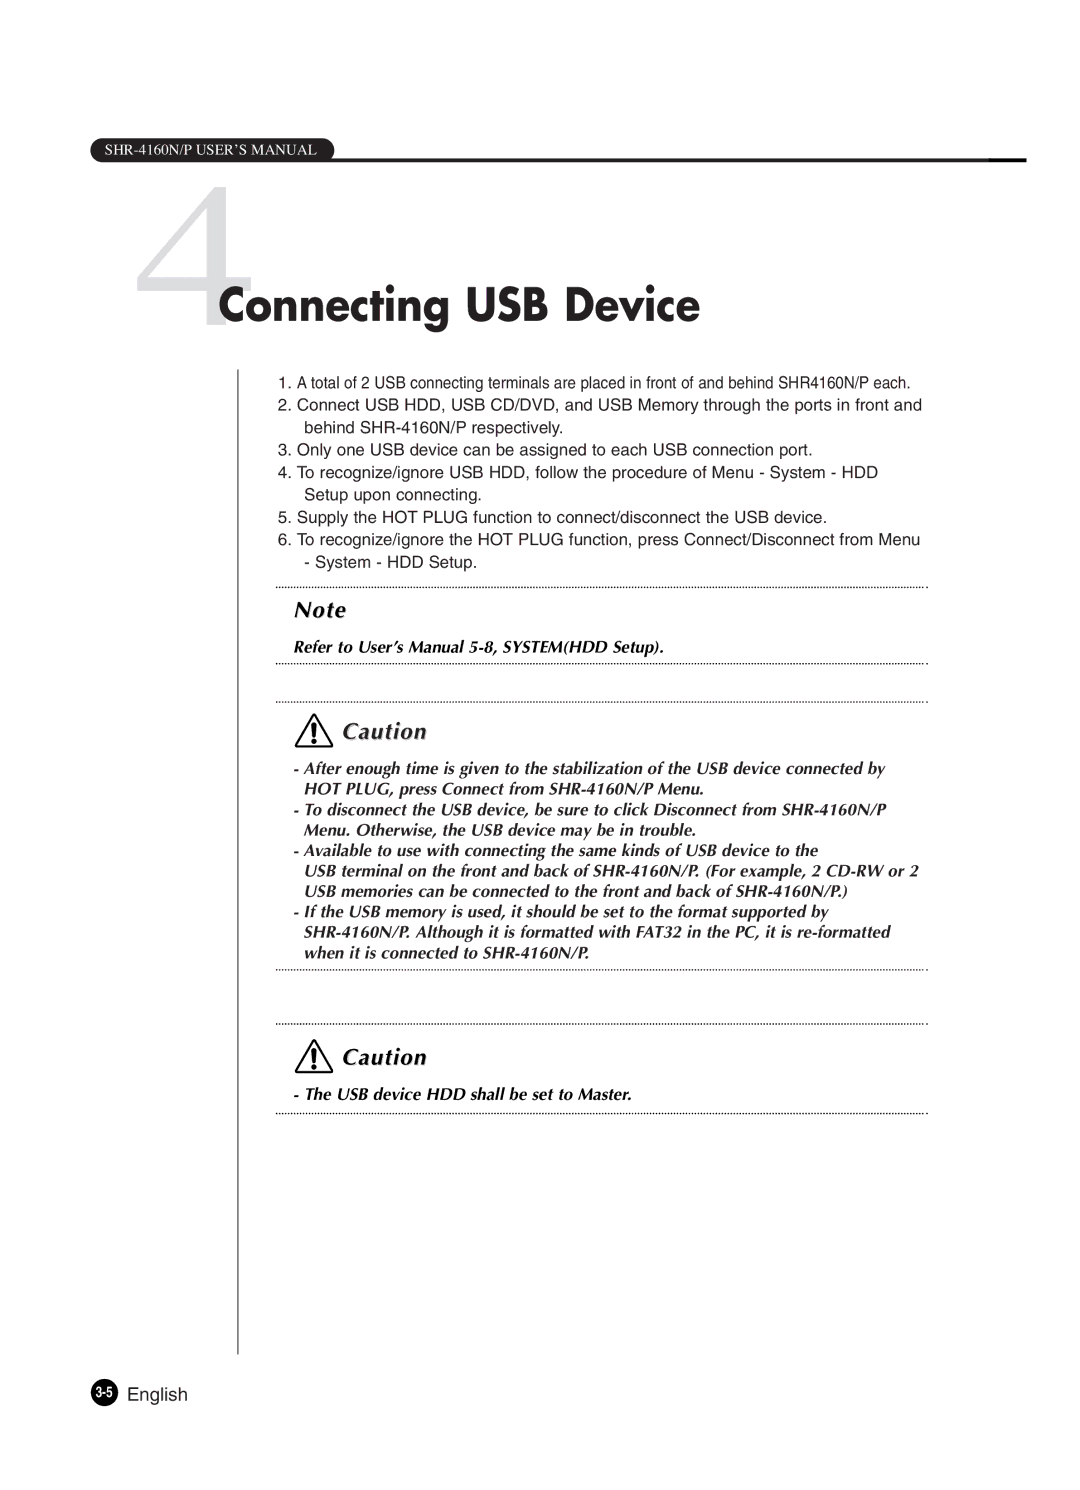 Samsung SHR-4160P manual 4Connecting USB Device, 5English 